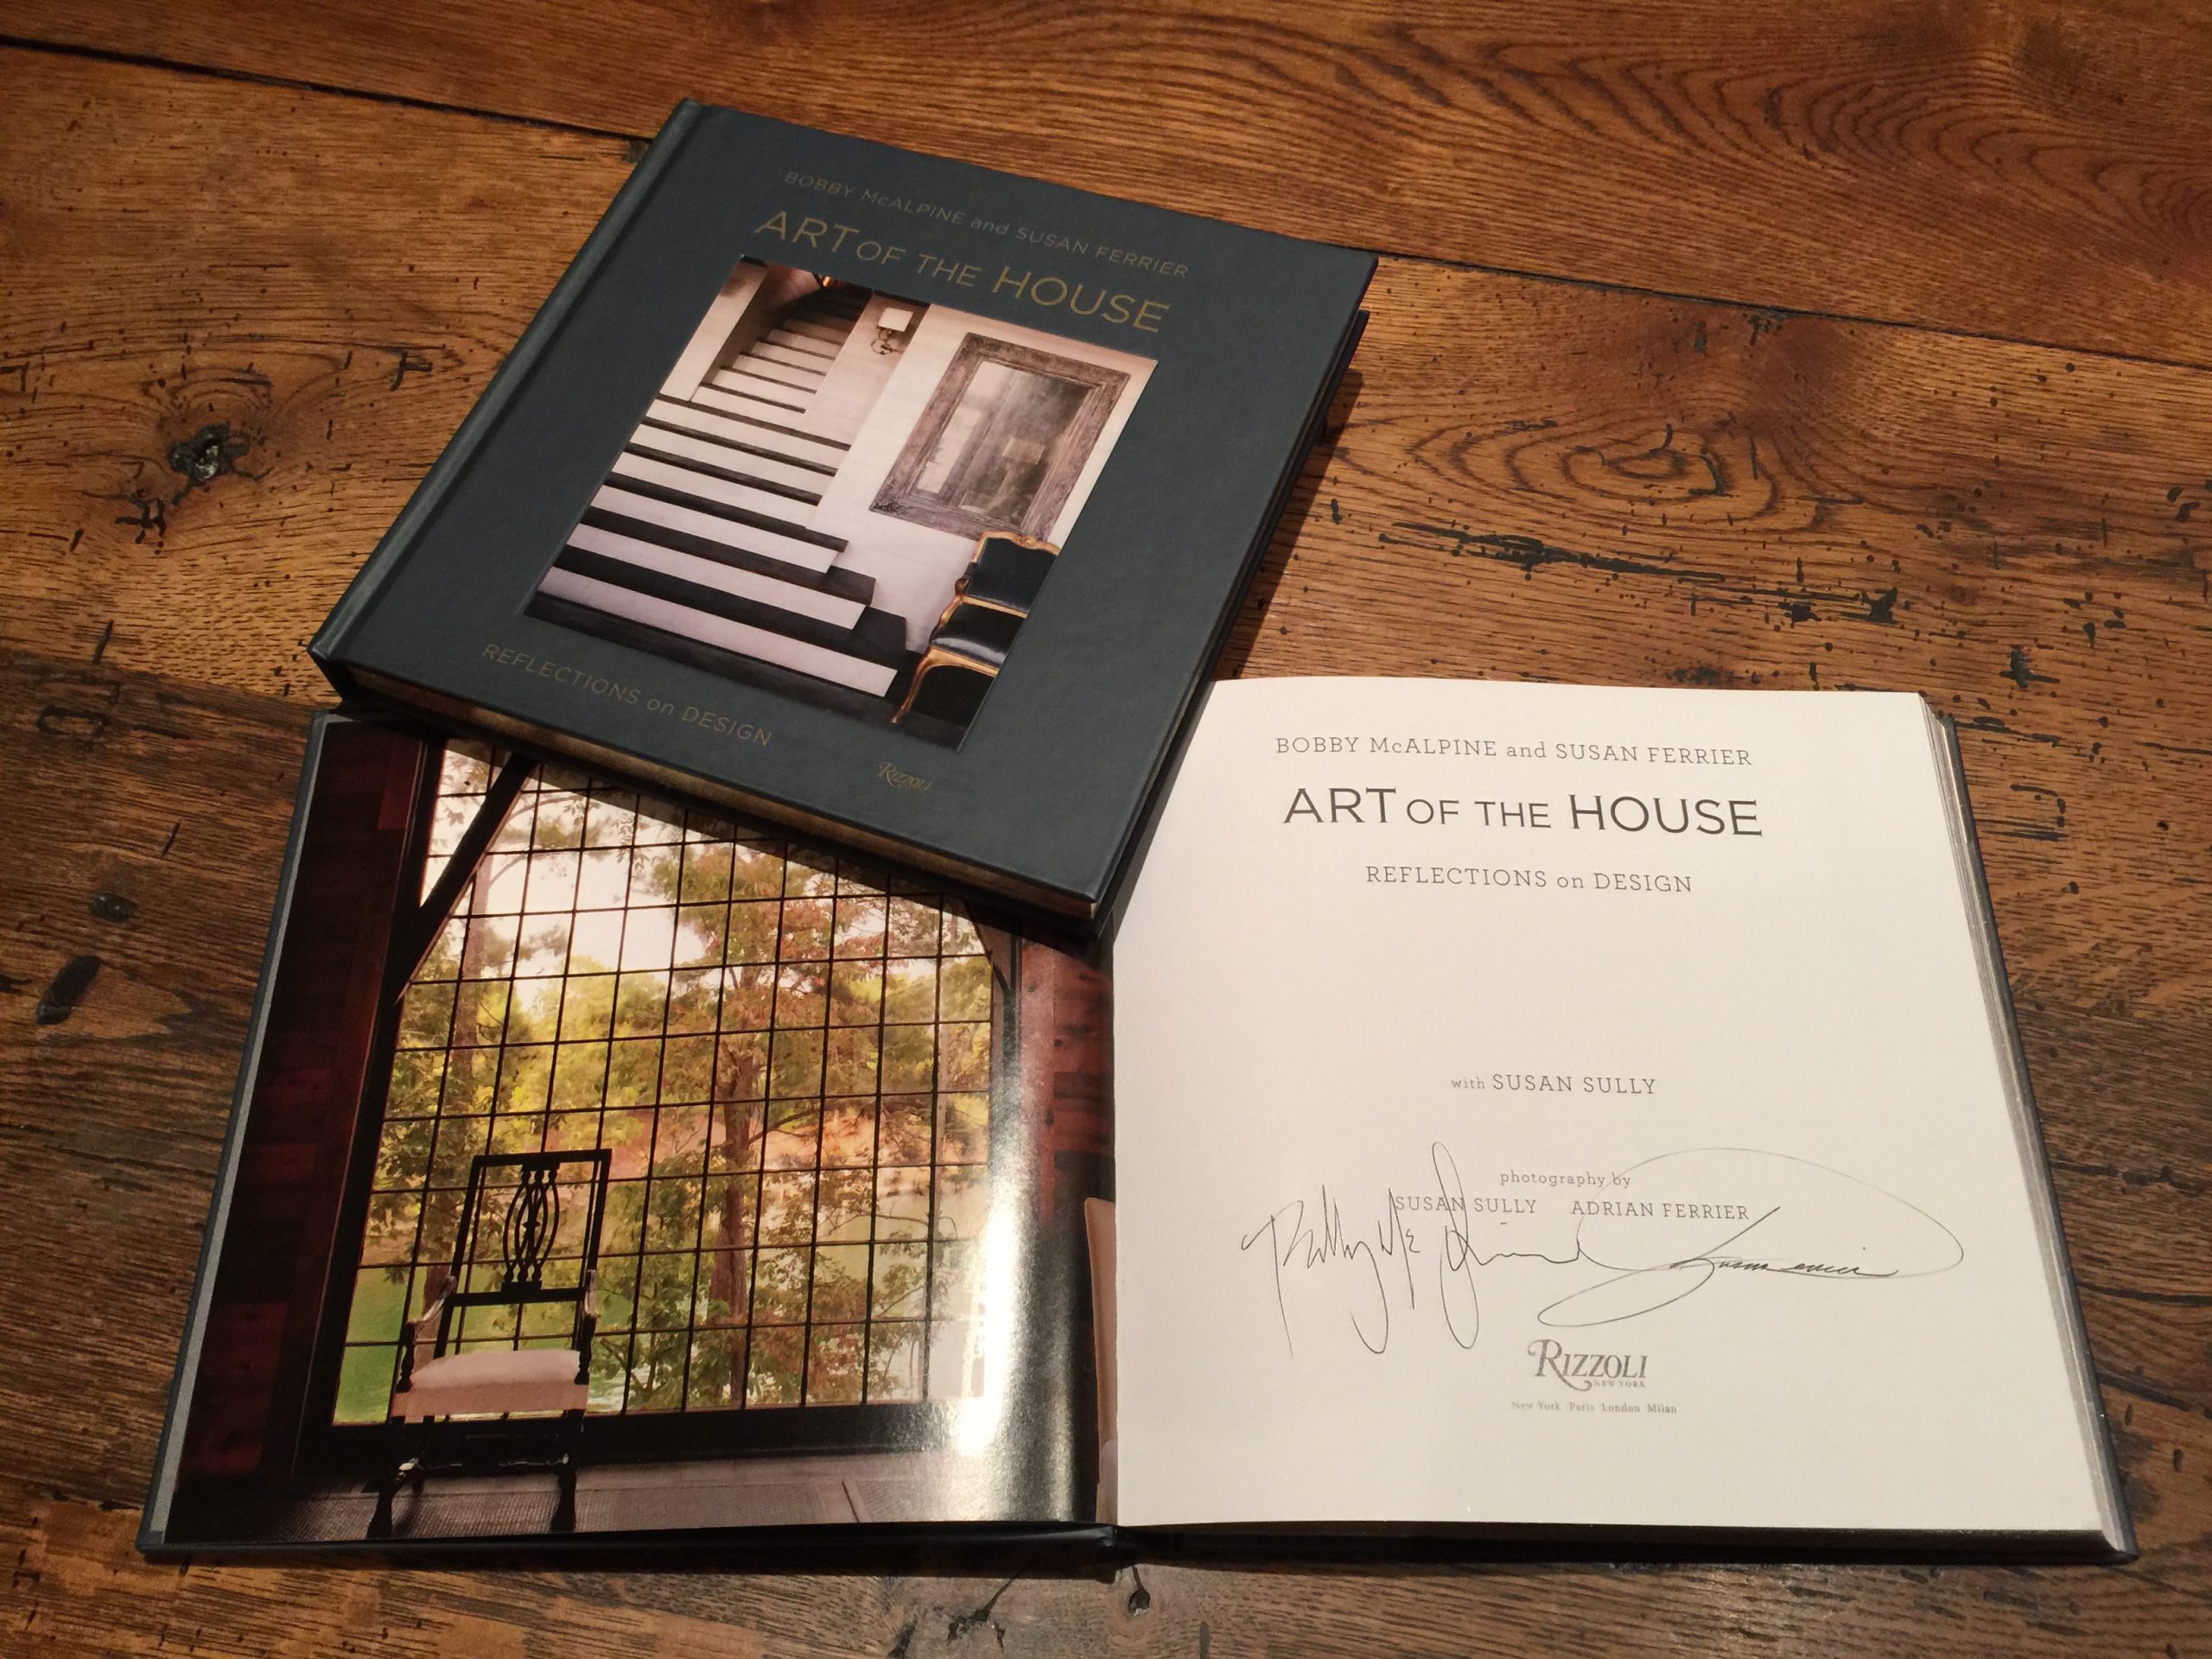 McAlpine Journal: Art of the House